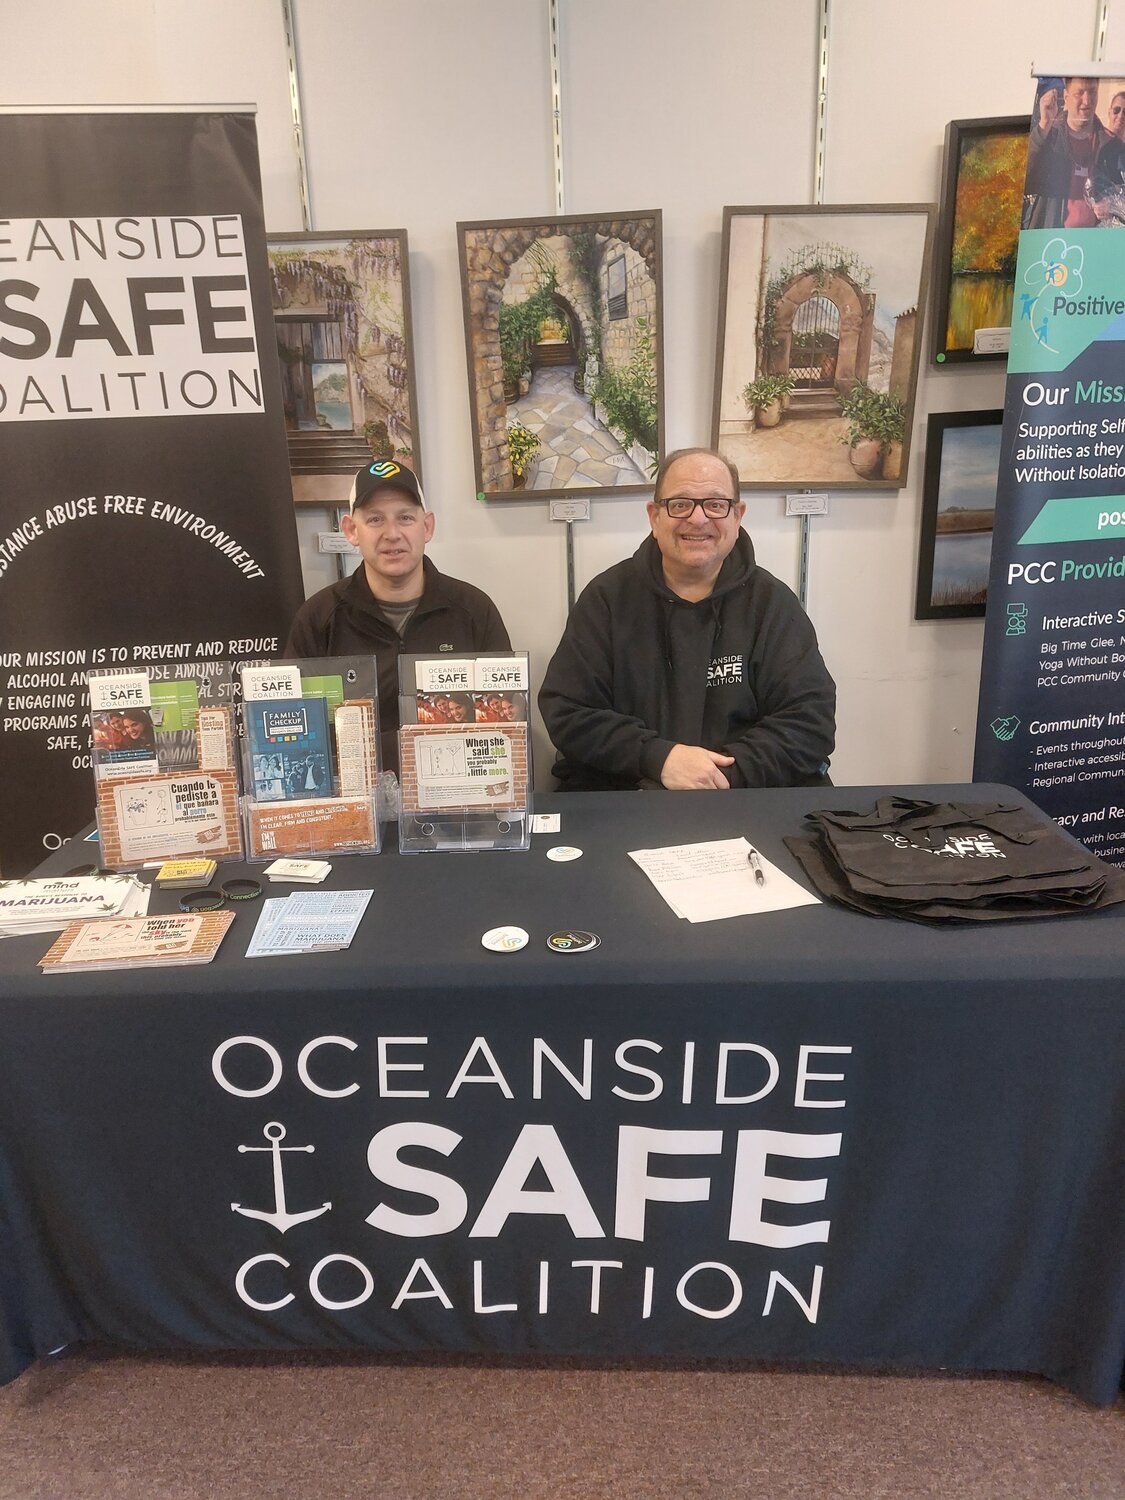 Oceanside SAFE Coalition, a drug use prevention and awareness organization founded in Oceanside welcomed interested volunteers